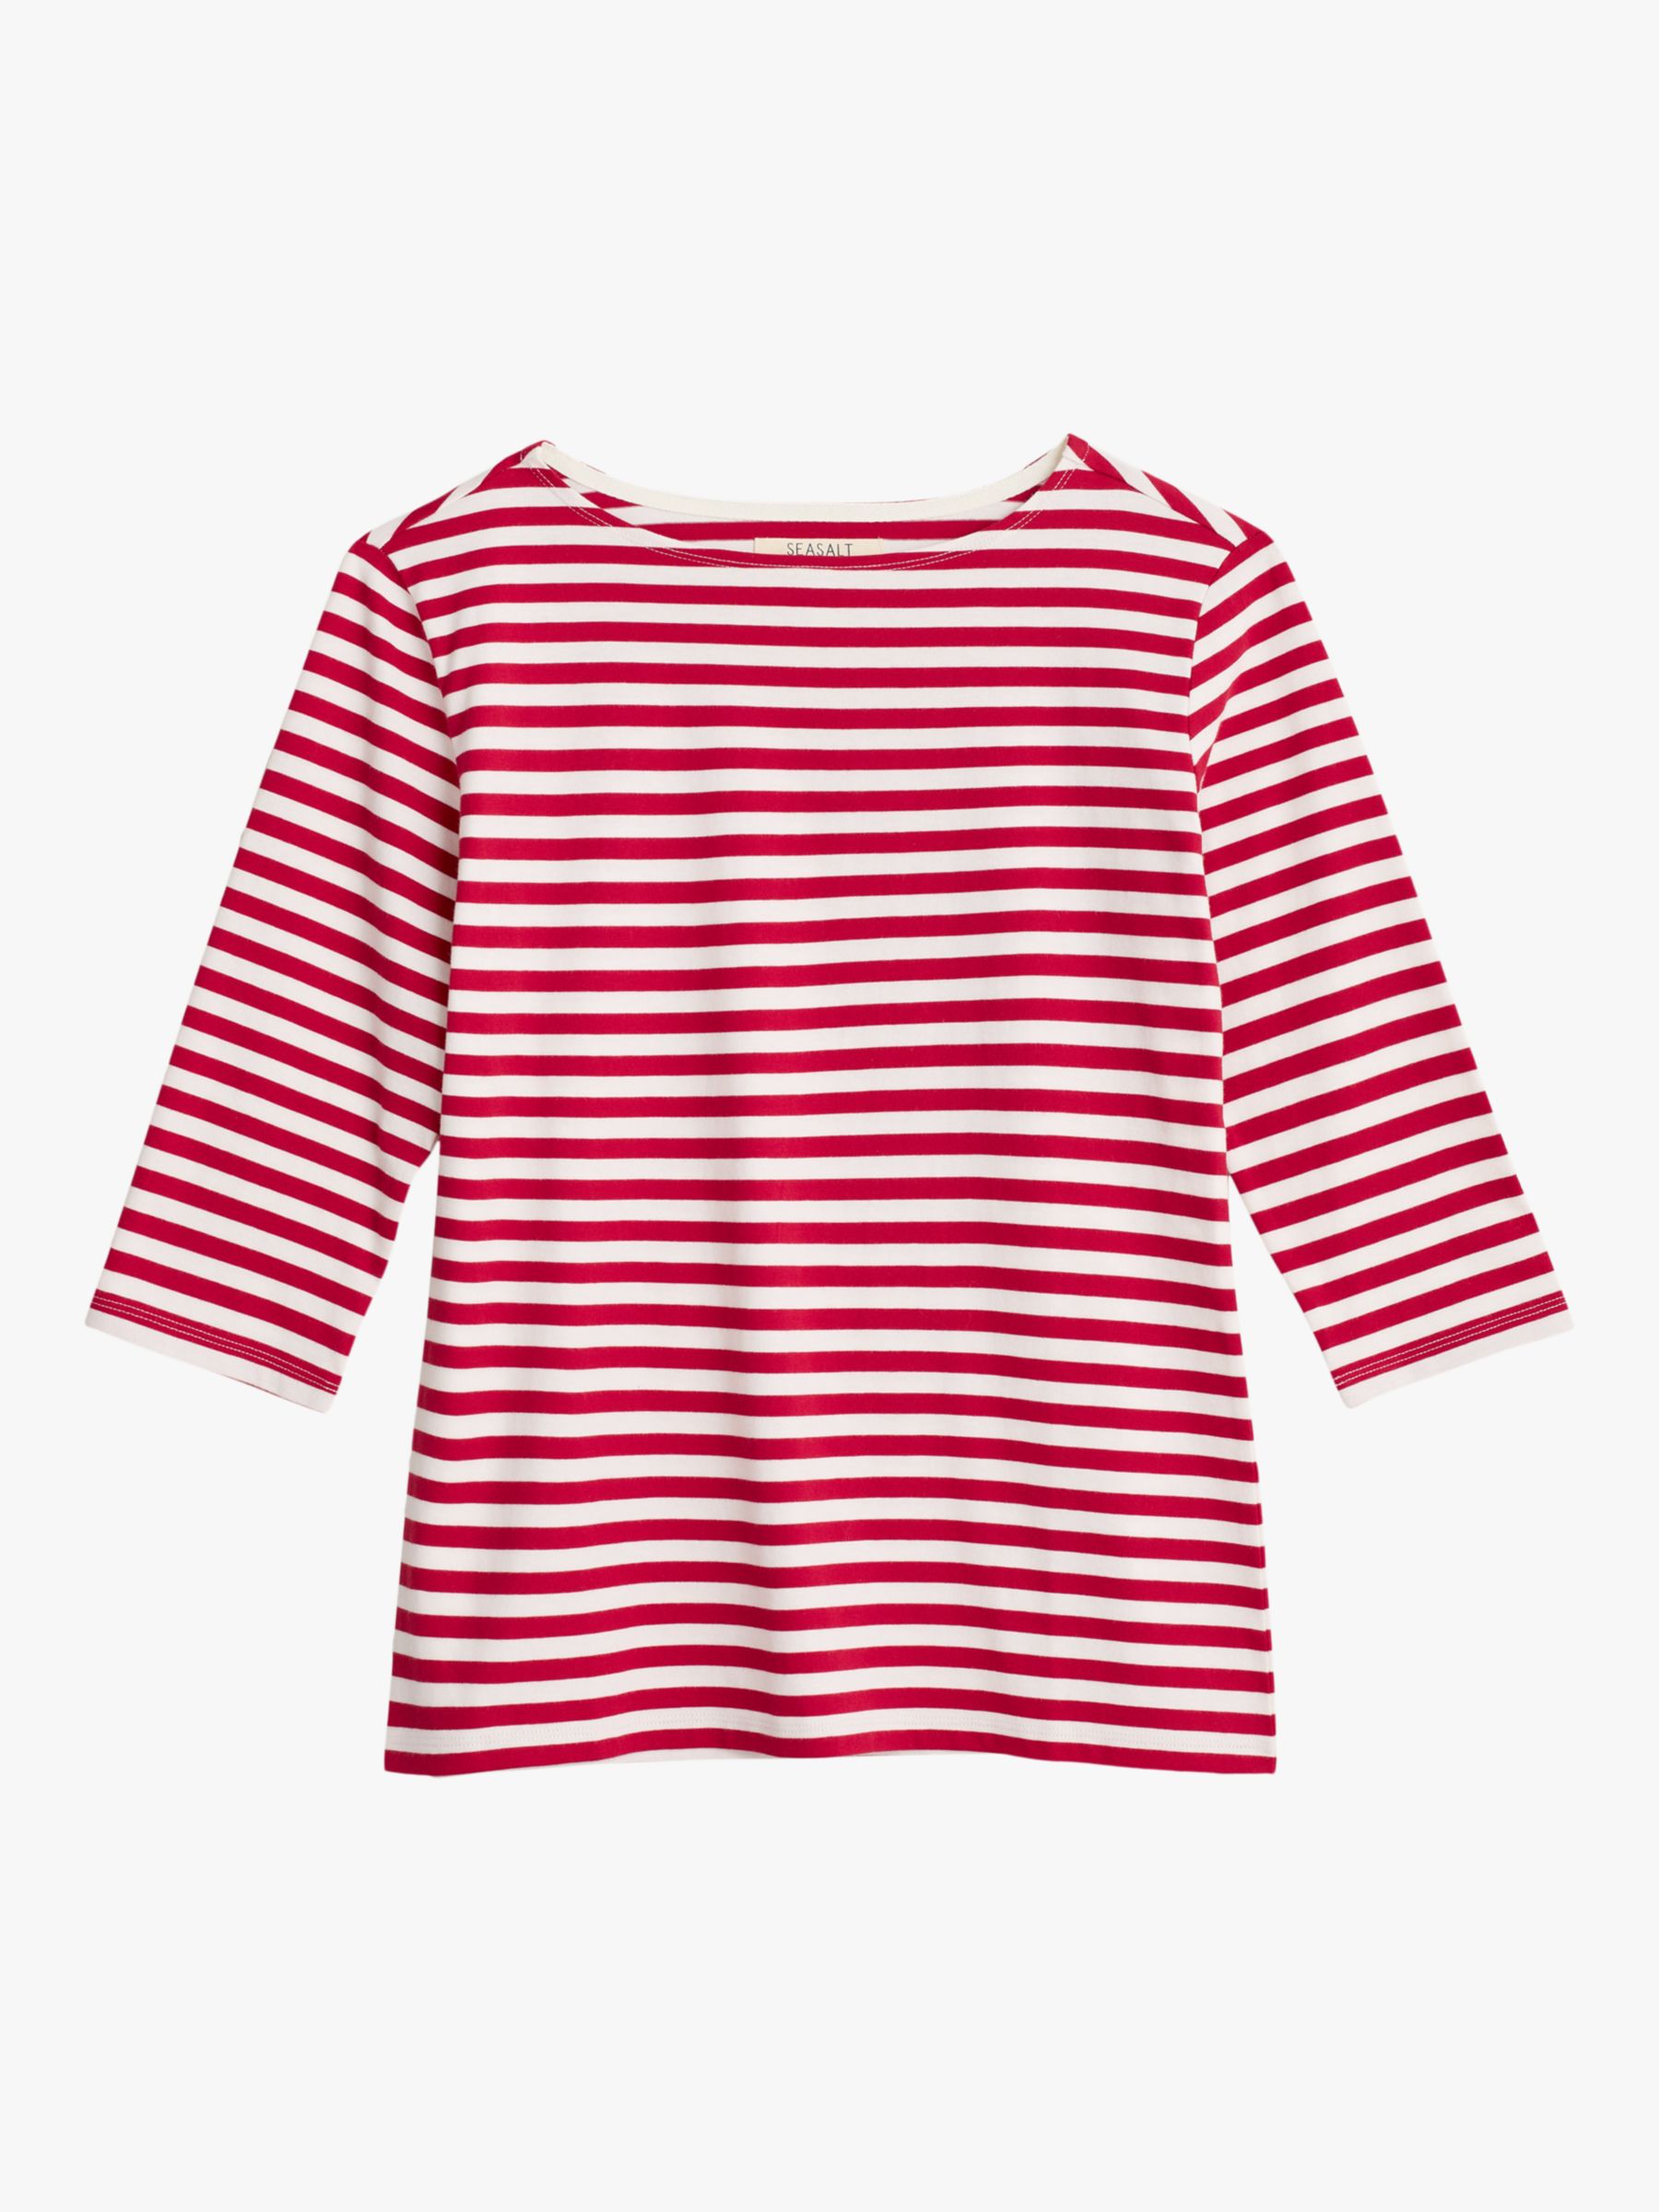 Seasalt Sailor Stripe T-Shirt, Red at John Lewis & Partners